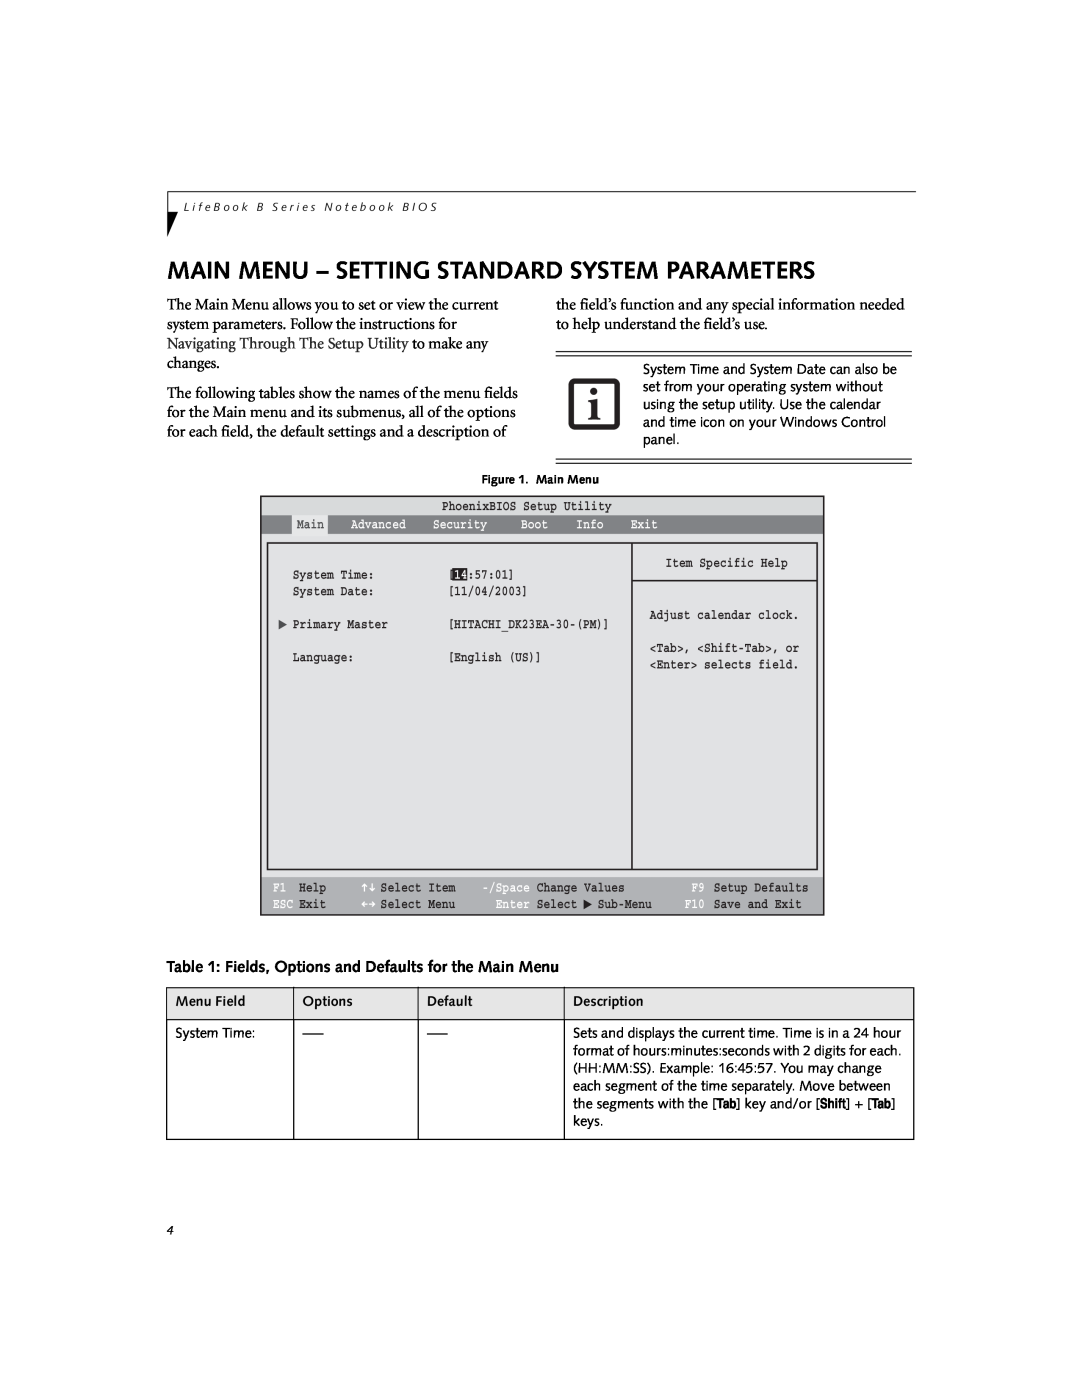 Fujitsu Siemens Computers B3000 manual Main Menu - Setting Standard System Parameters 